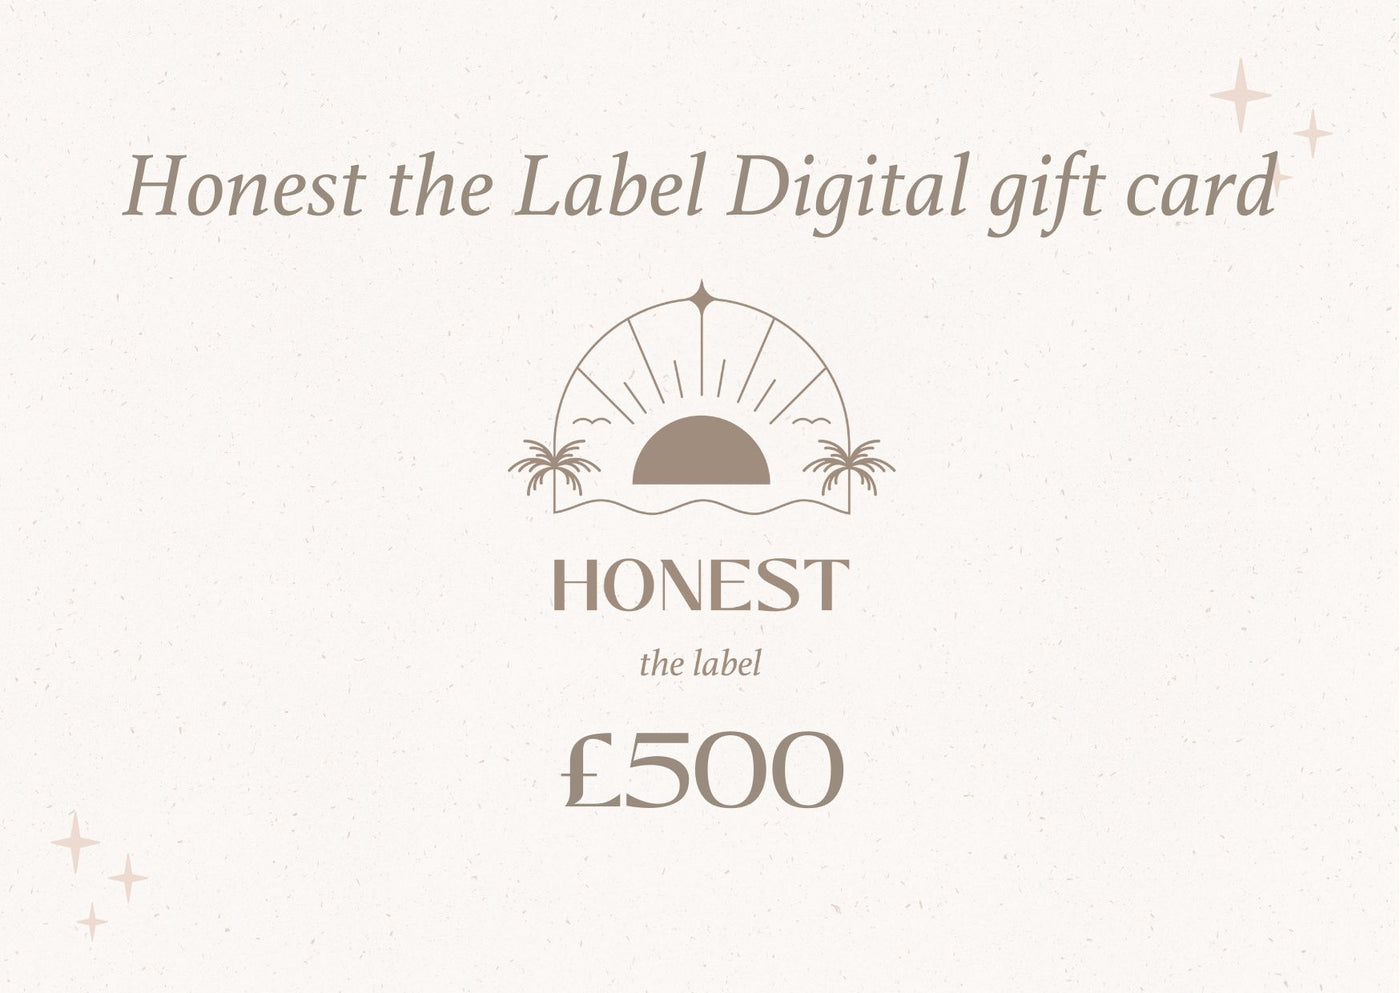 Honest the Label Digital Gift Card